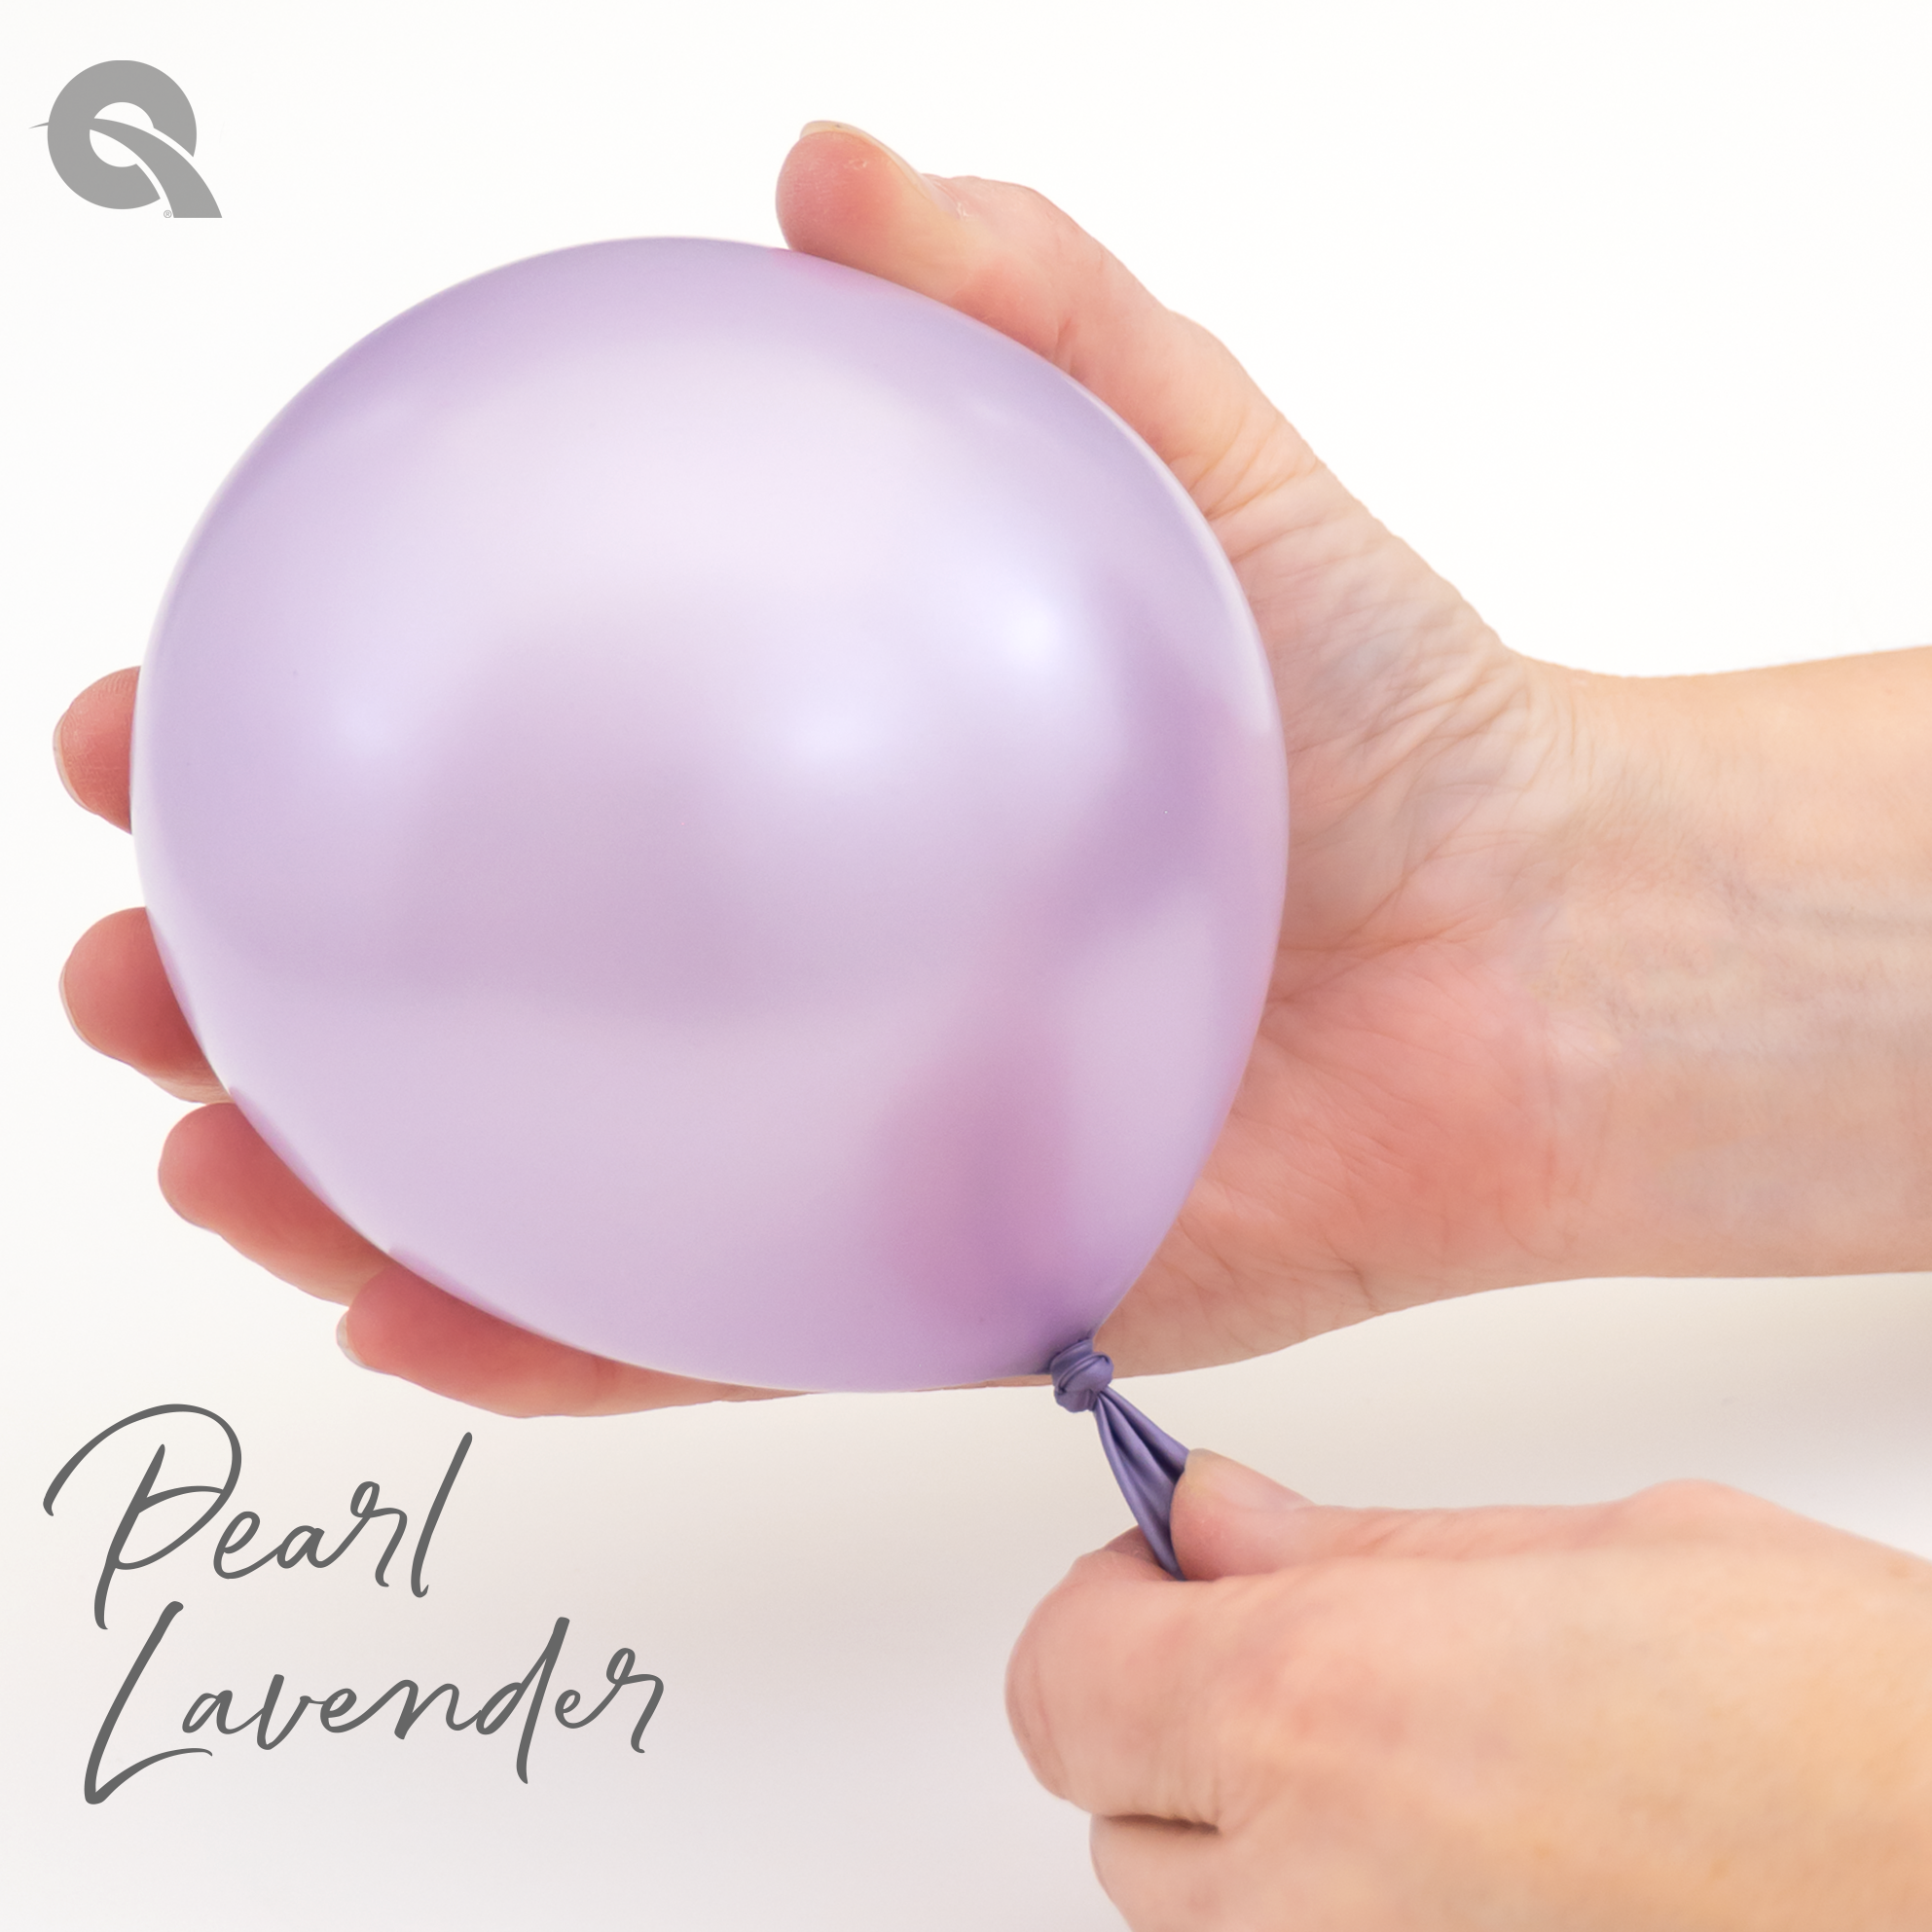 5" Qualatex Pastel Pearl Latex Balloons Assortment Bag | 100 Count